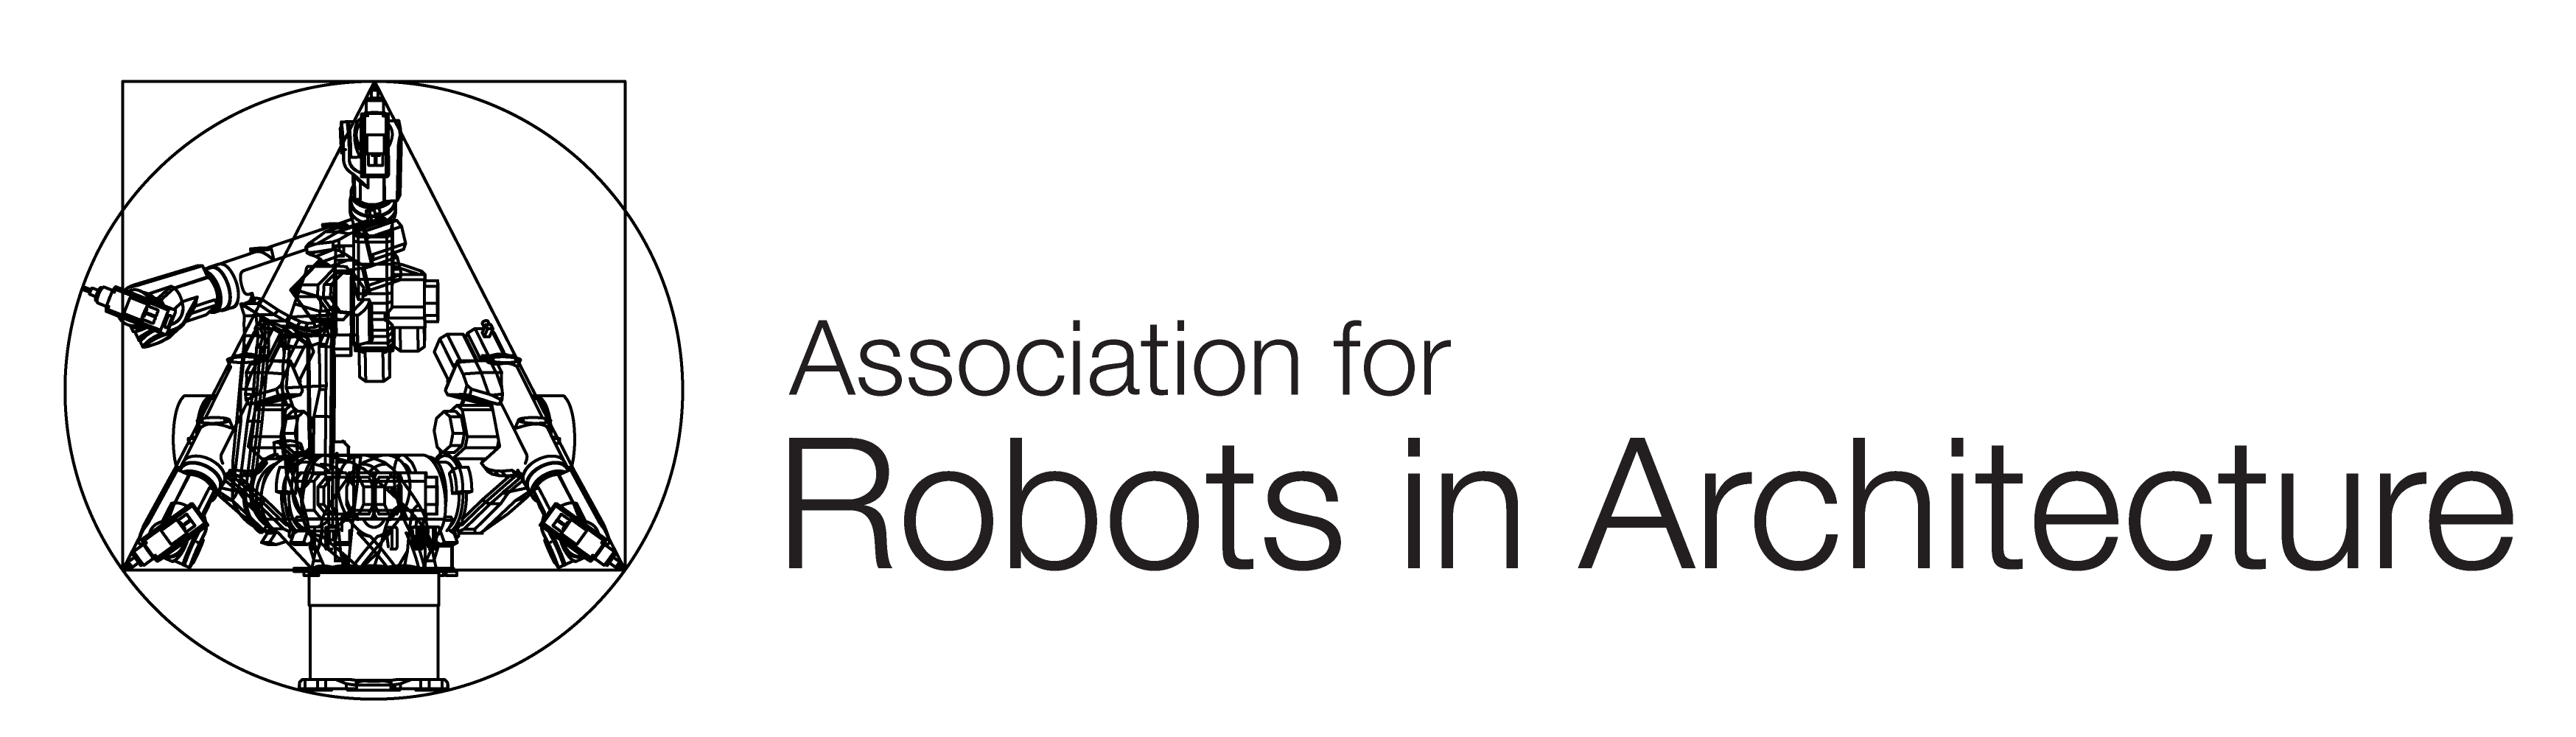 robots in architecture logo